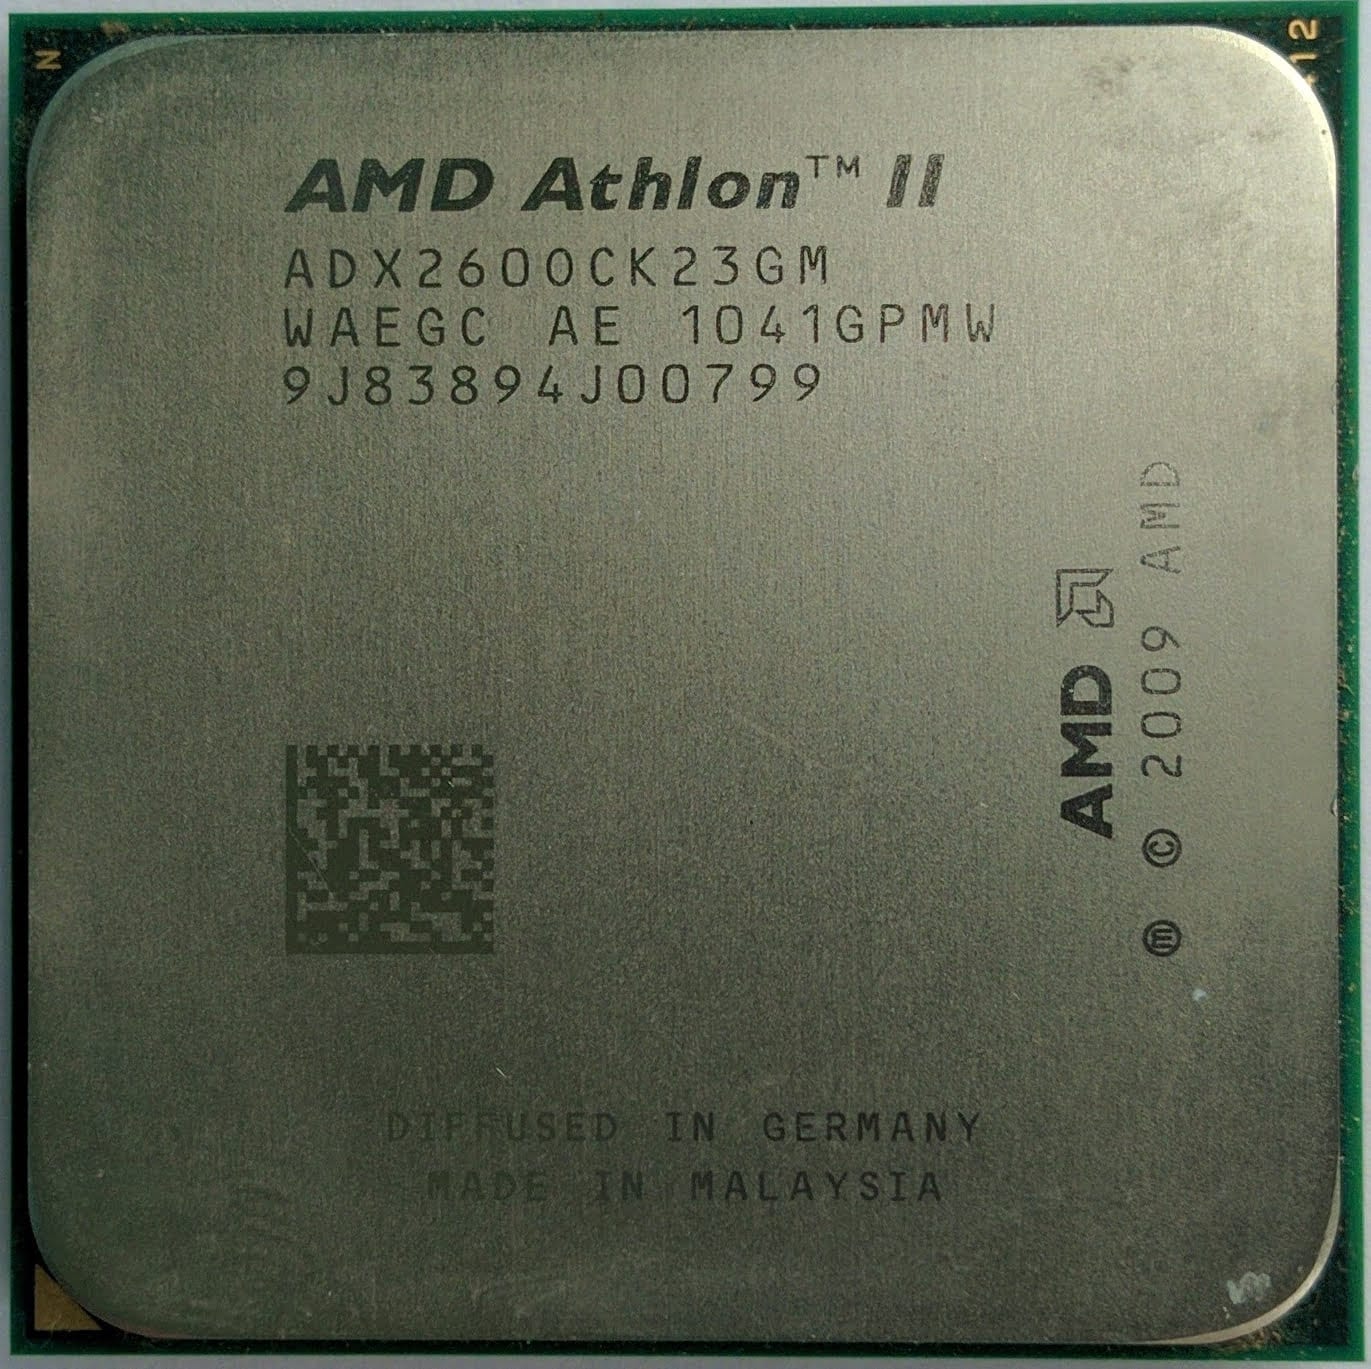 Athlon x2 сокет. AMD Phenom II x4 975 Black Edition. AMD Athlon 64 x2 Dual Core Processor 5000 сокет. AMD Phenom 975 am2. AMD Athlon adx2600.